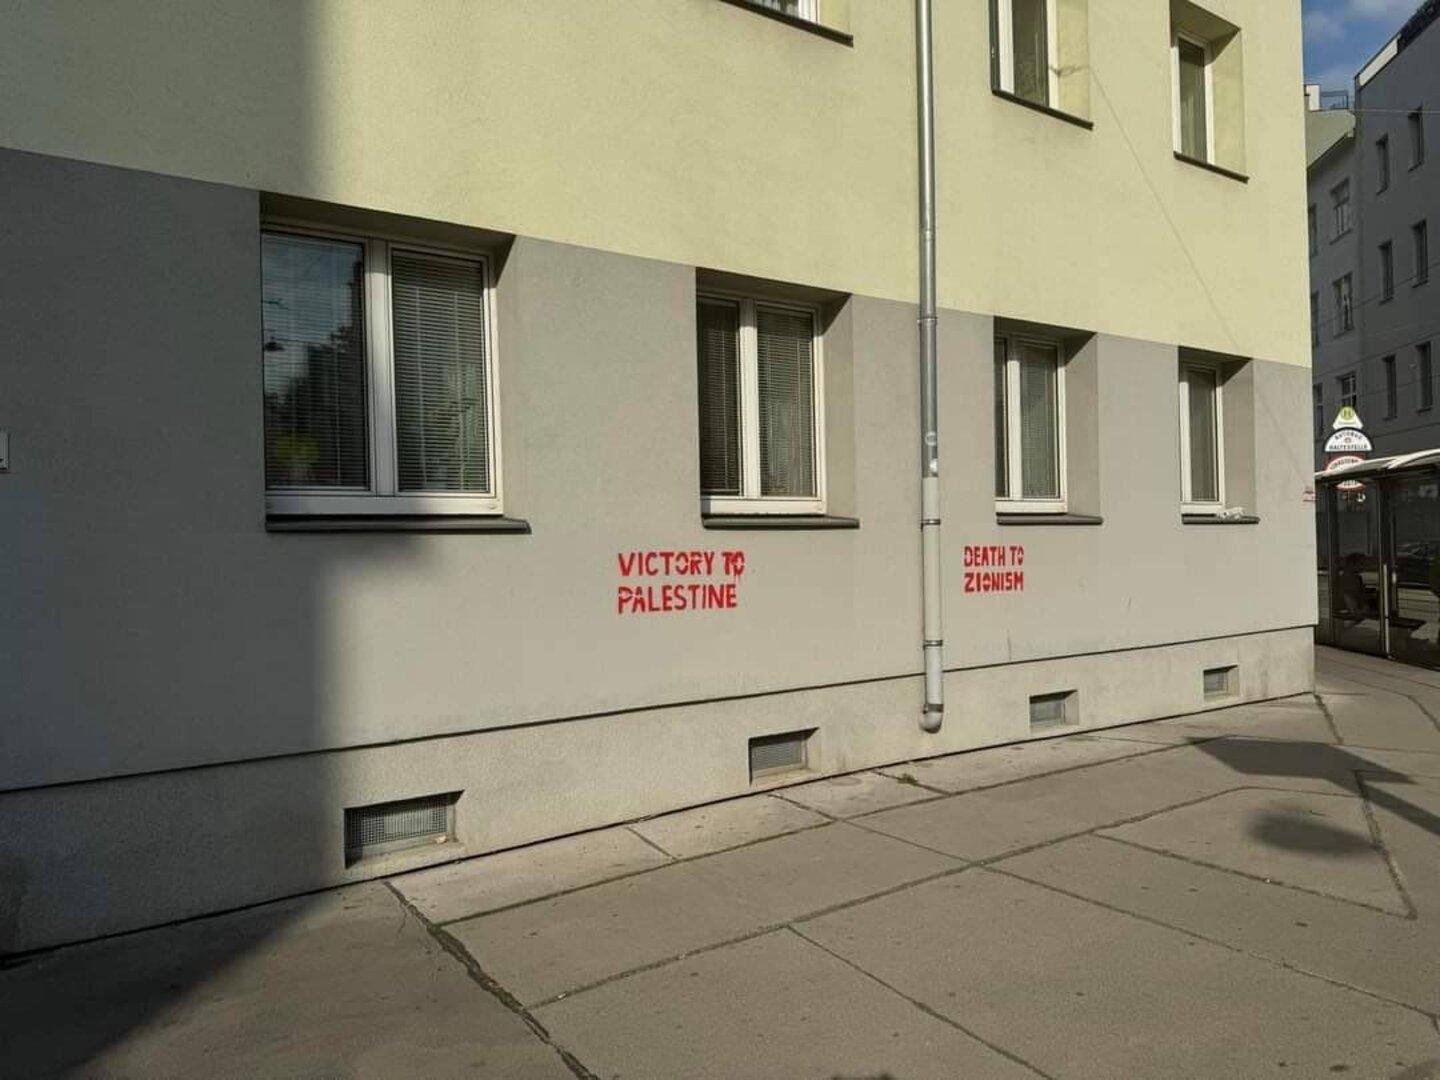 Antisemitische Schmierereien an Hausfassaden in Wien